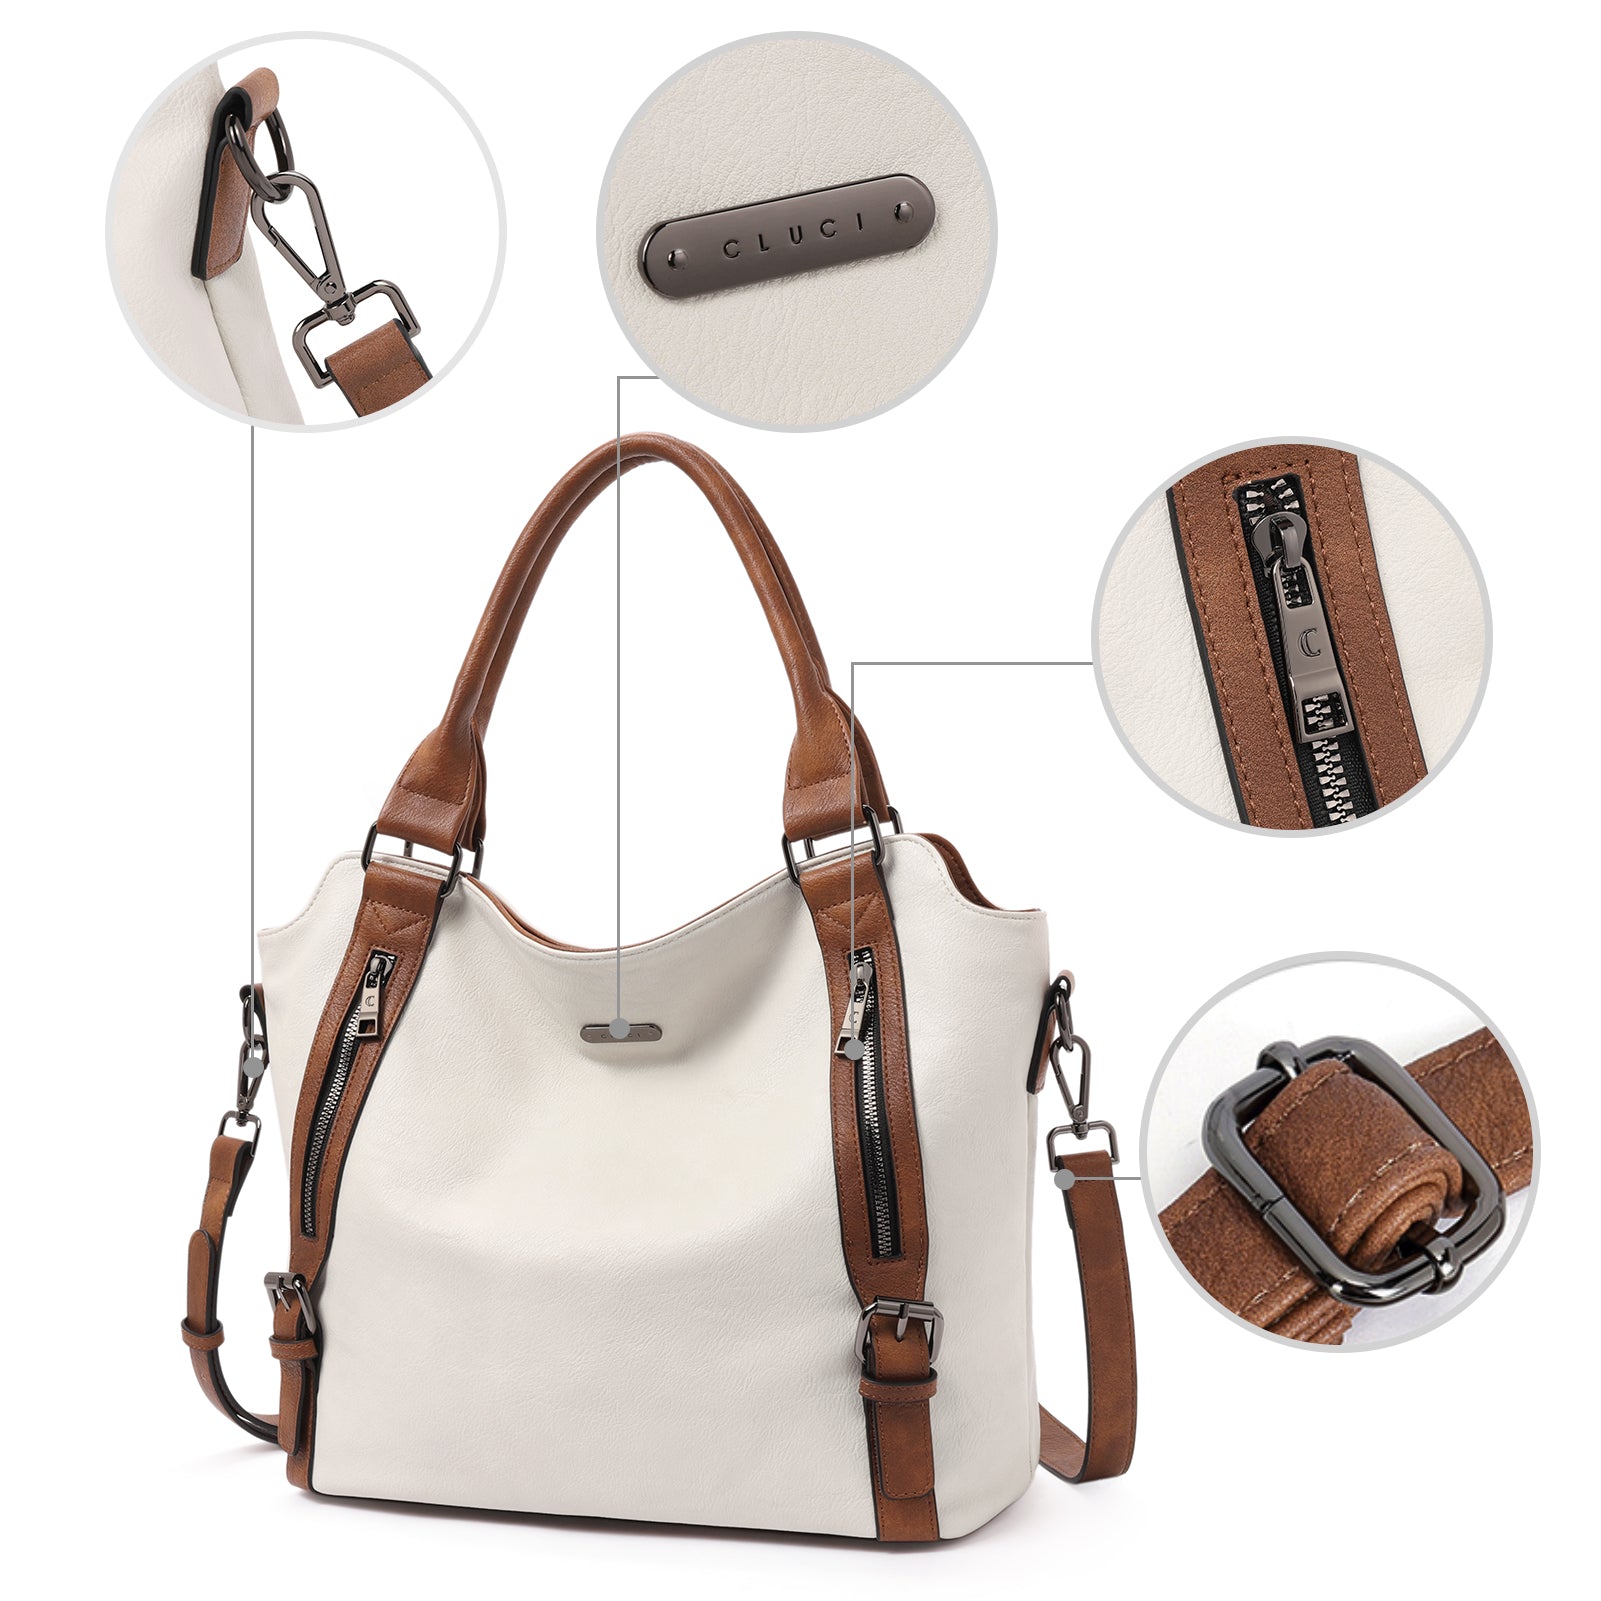 CLUCI Hobo Bags for Women Vegan Leather Handbags Large Tote Ladies Pur